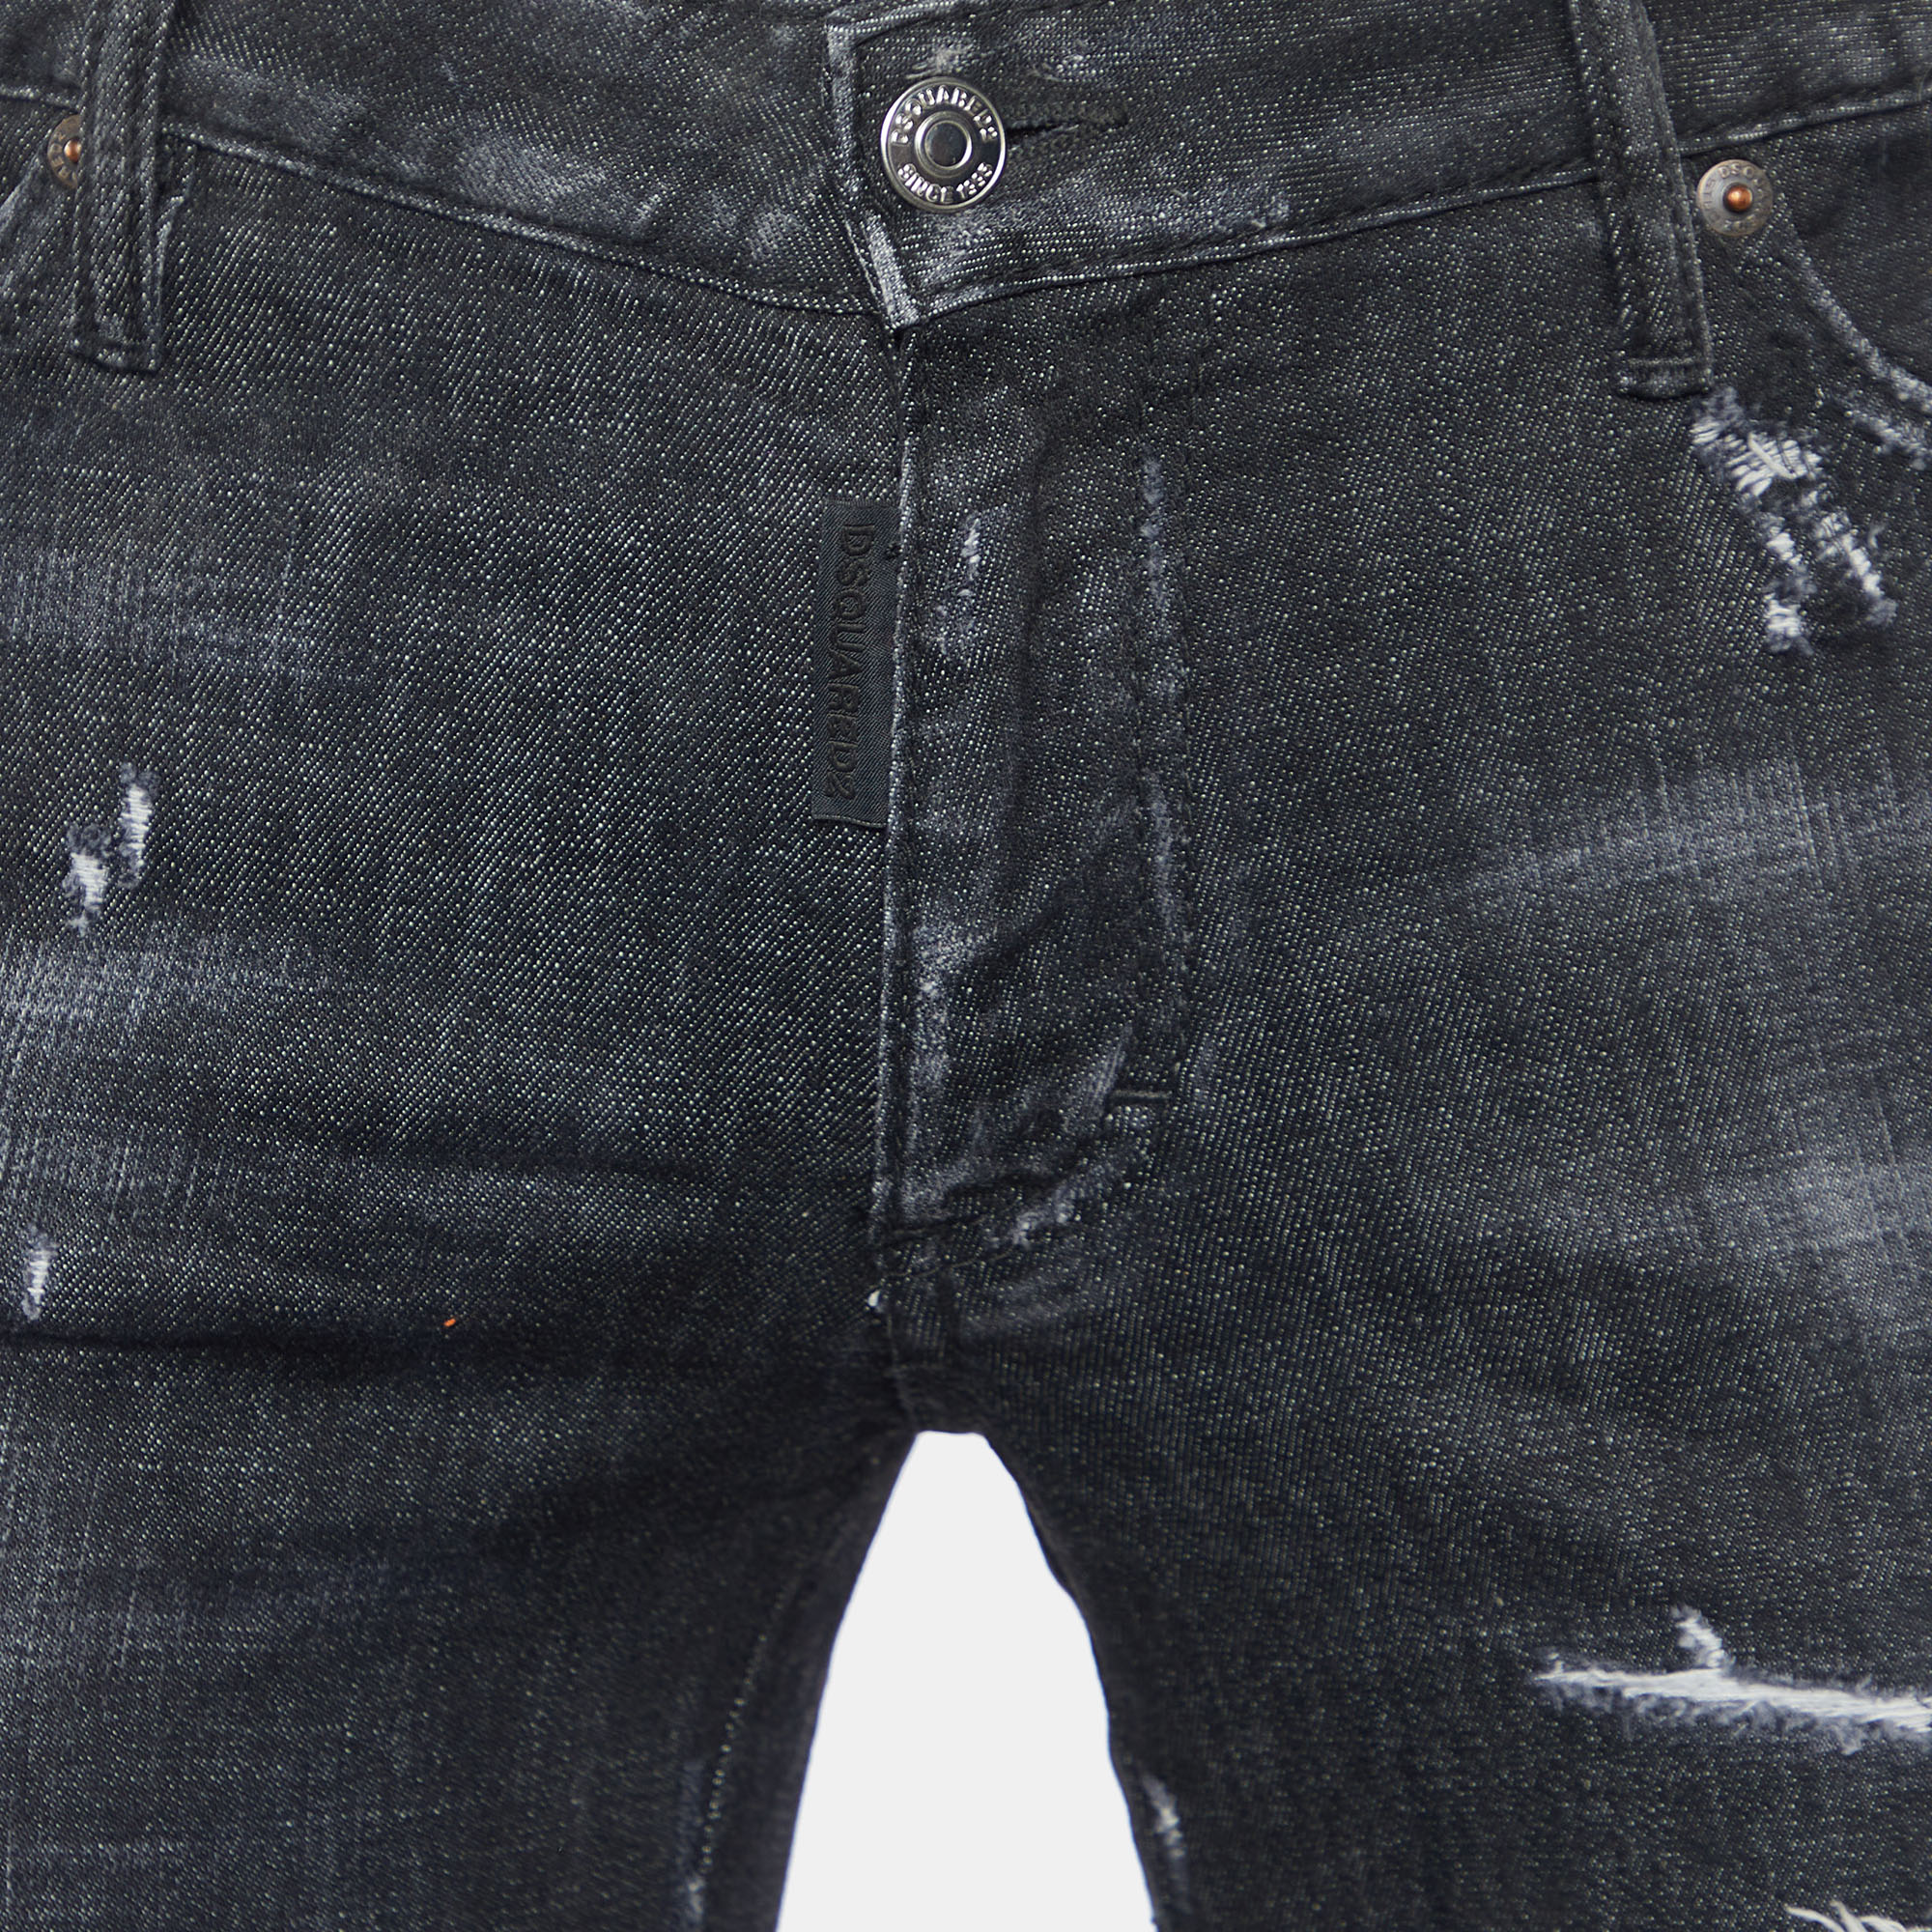 Dsquared2 Black Washed Denim Distressed Skinny Cropped Jeans L